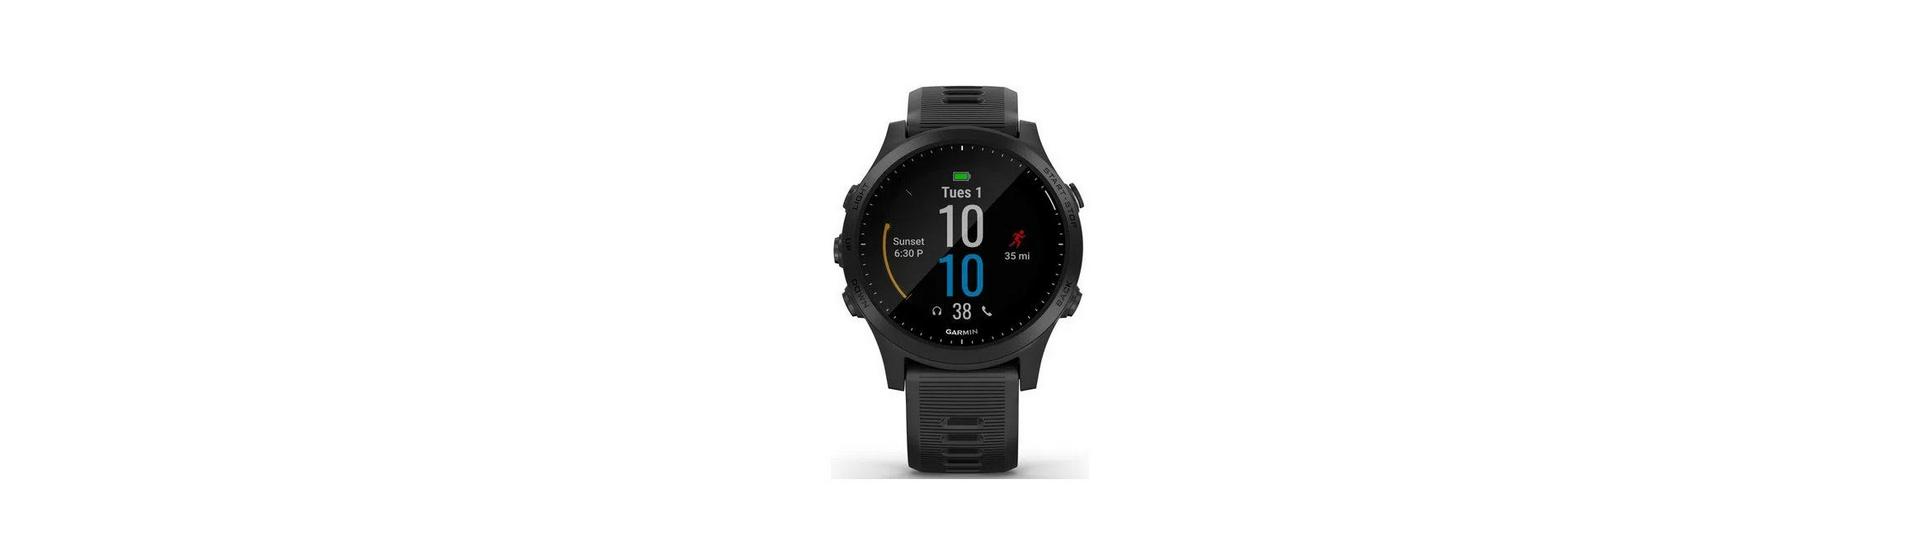 Promoção: Smartwatch Garmin Forerunner 945 GPS na Amazon